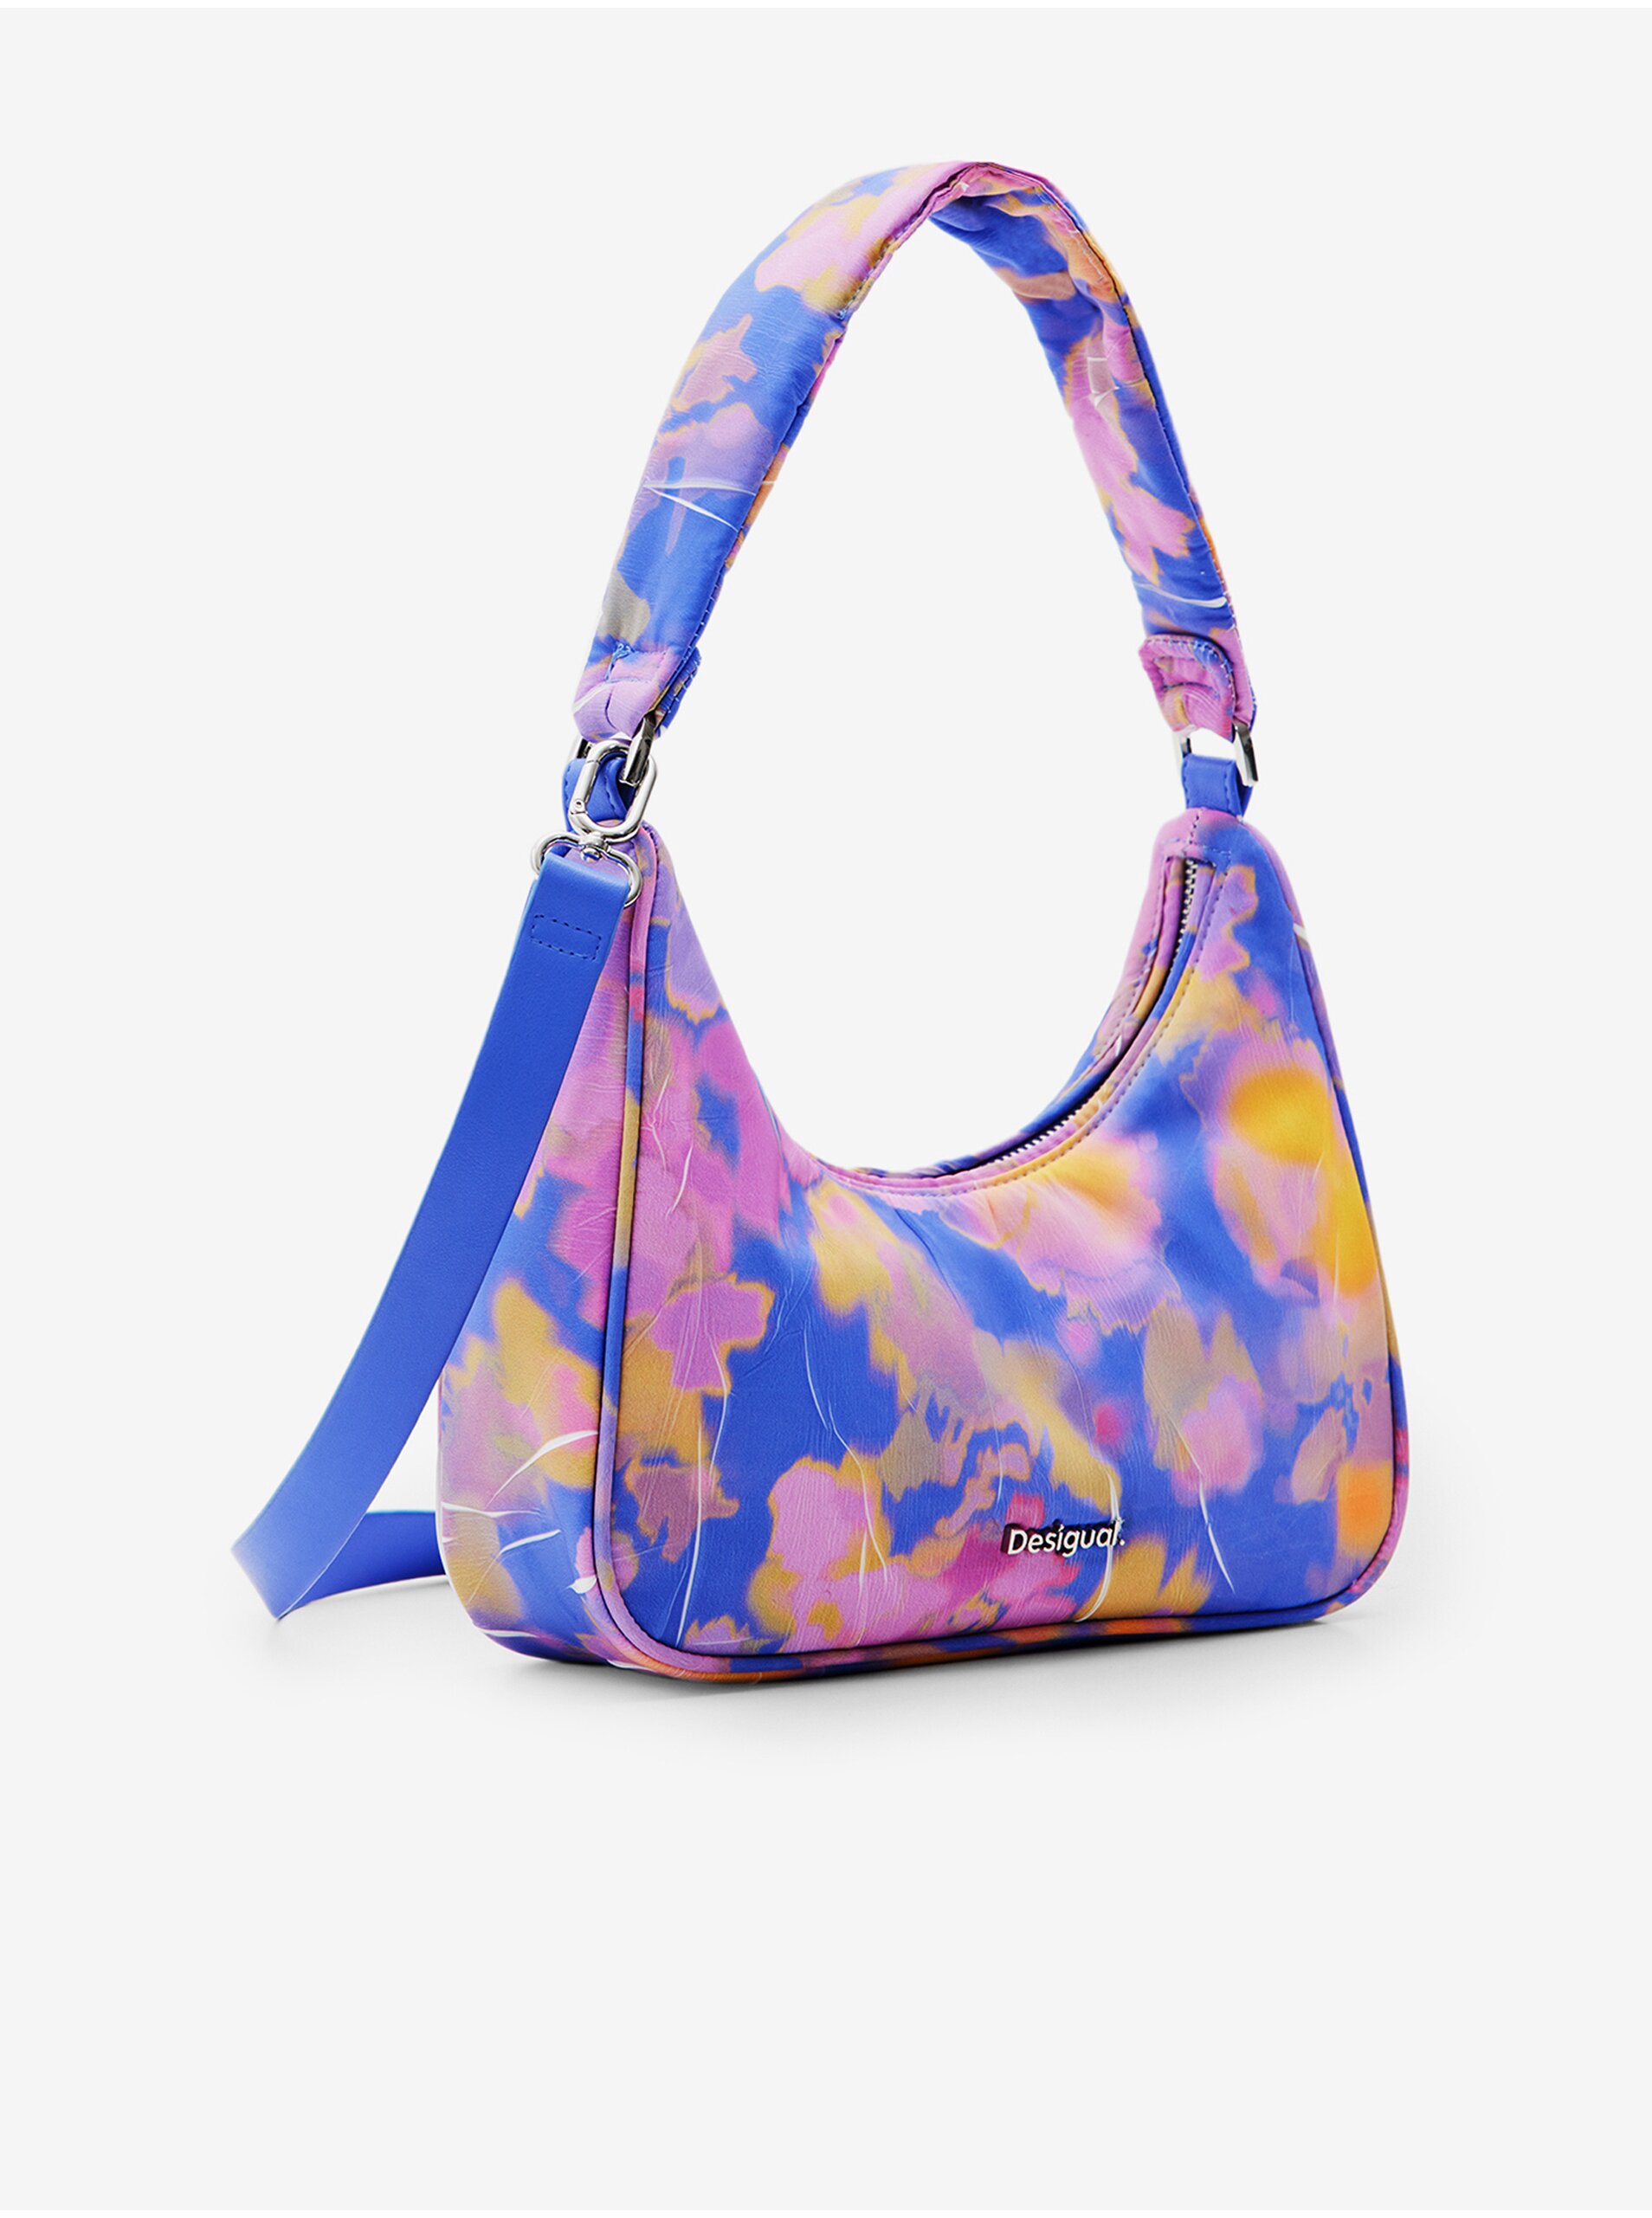 Purple-Blue Women's Patterned Handbag Desigual Abstractum Medley - Women